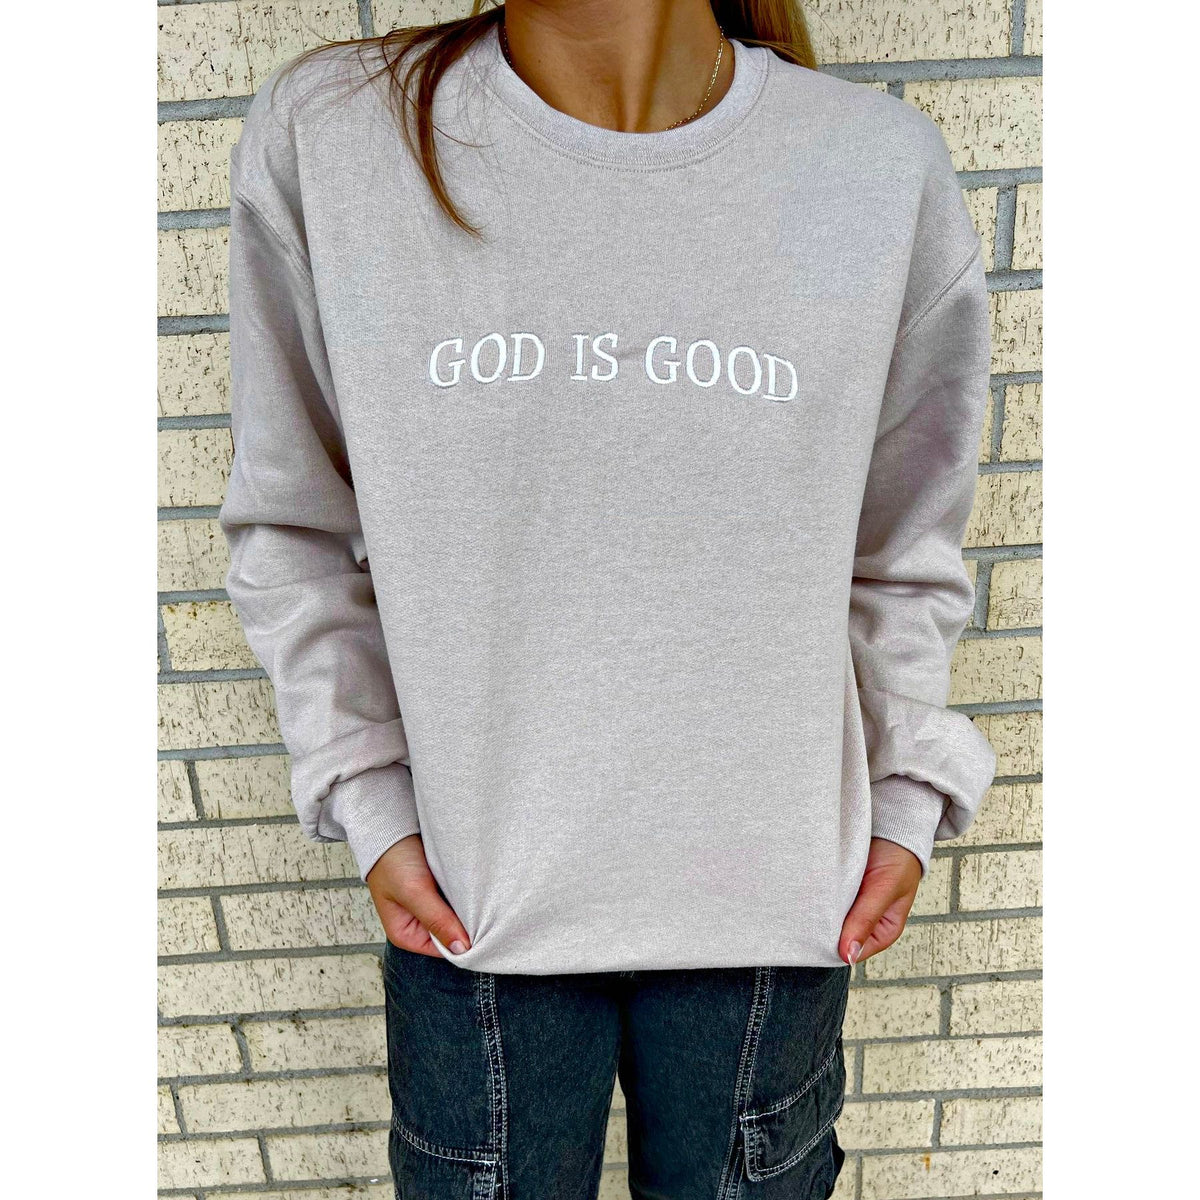 God is Good Tan embroidered Sweatshirt